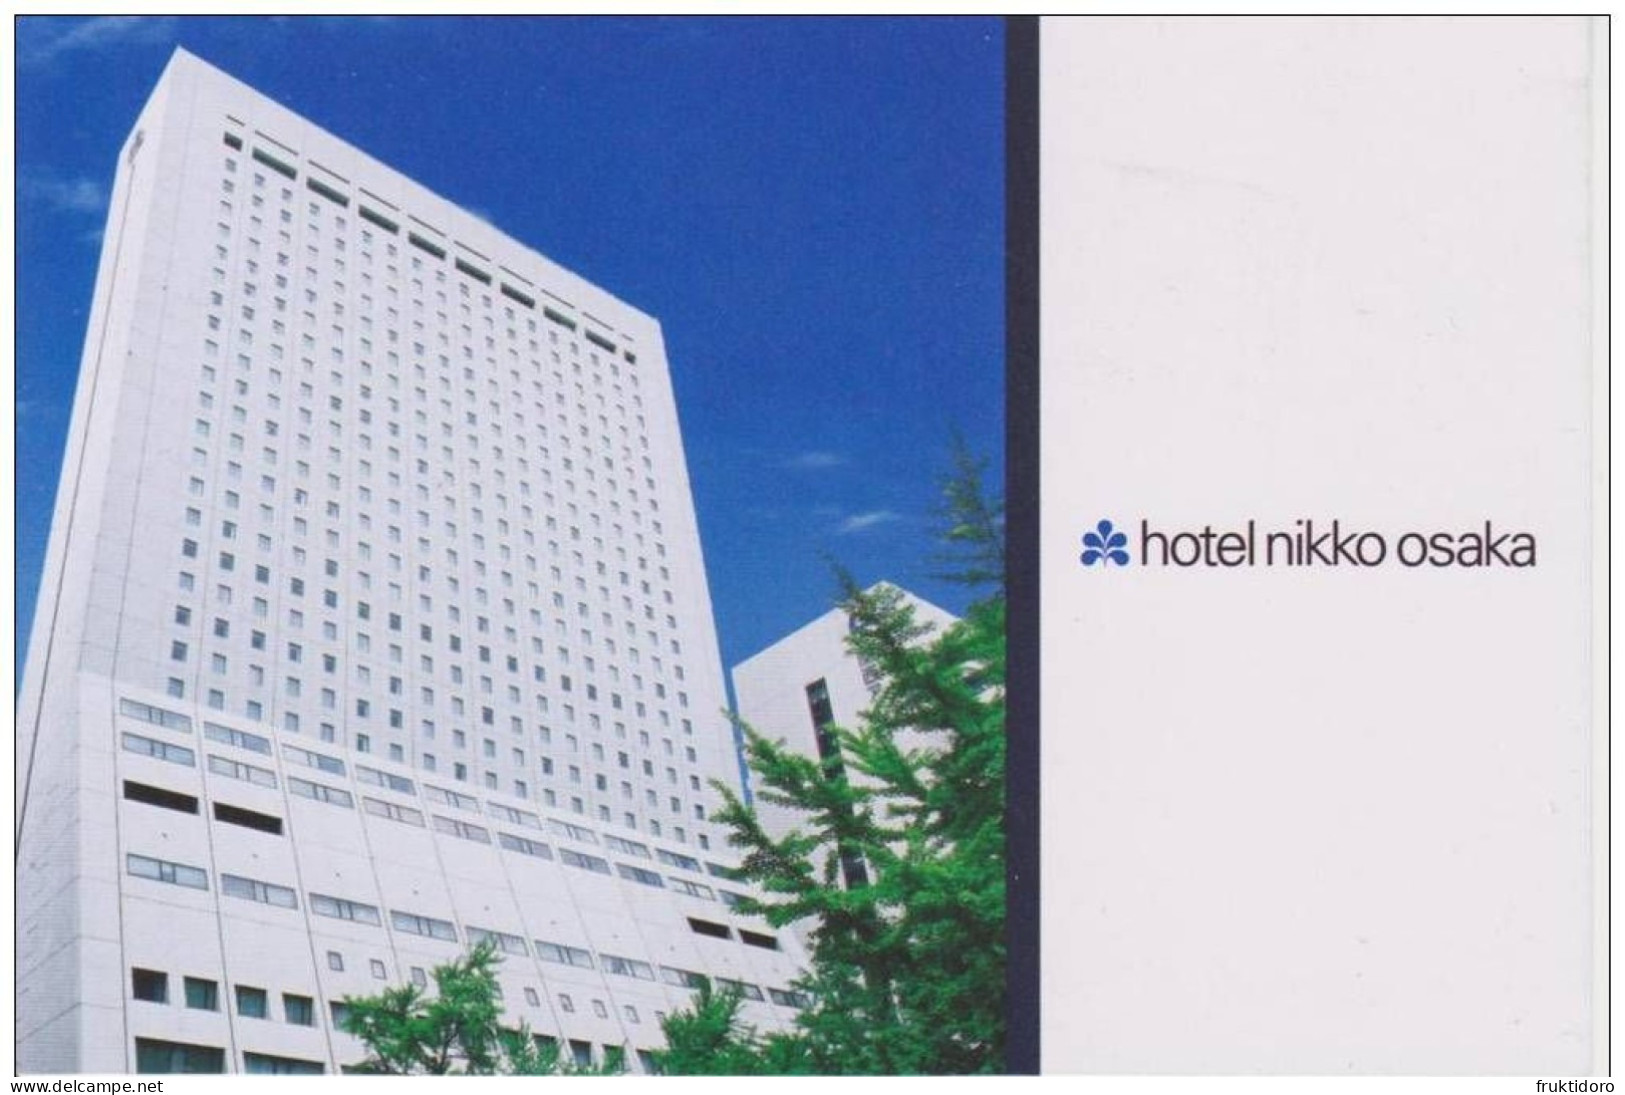 AKJP Japan Postcards Hotels Nikko Osaka / ANA Hotel Hiroshima / Haneda Airport Excel Hotel Tokyu / Okura Kobe Hotel - Collections & Lots